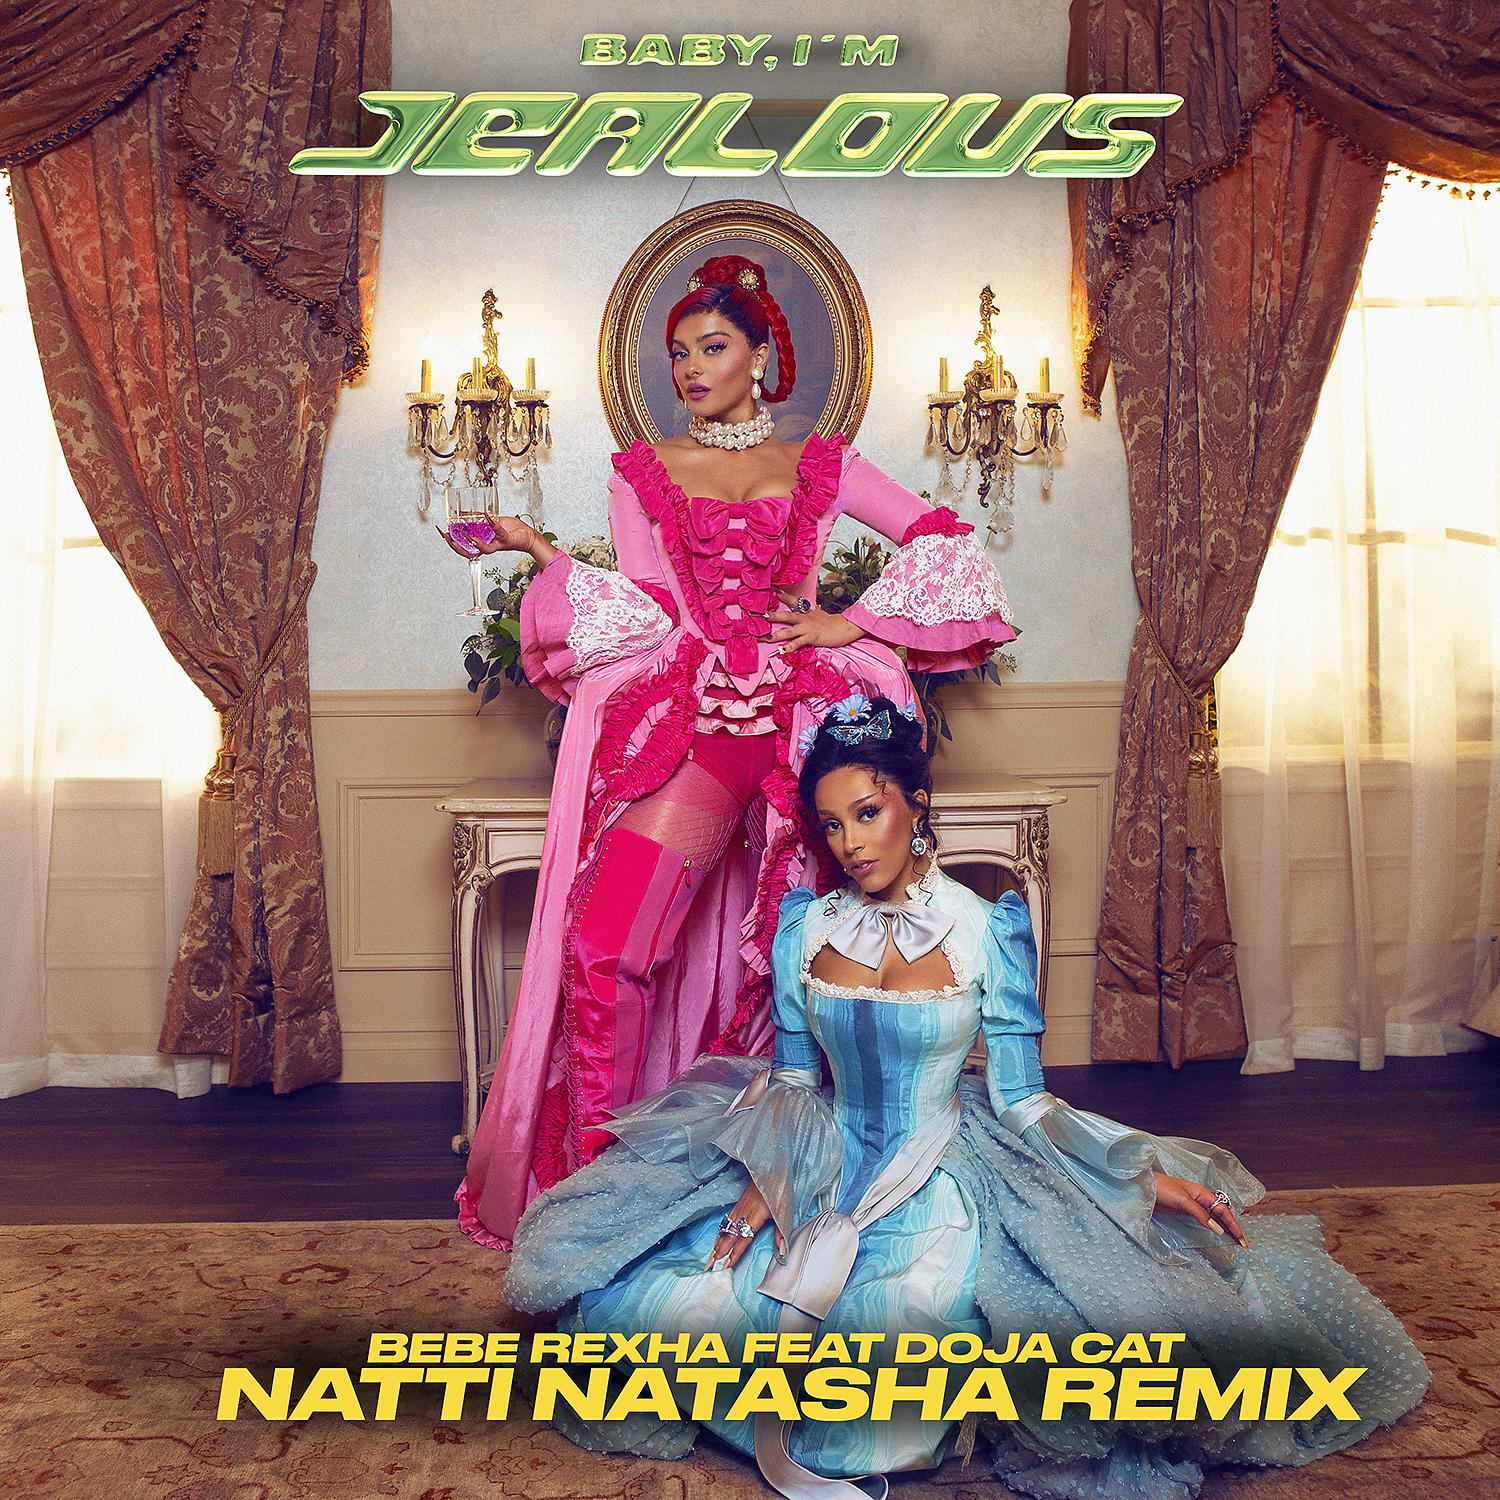 Bebe Rexha, Doja Cat - Baby, I'm Jealous (feat. Doja Cat) [Natti Natasha Remix]